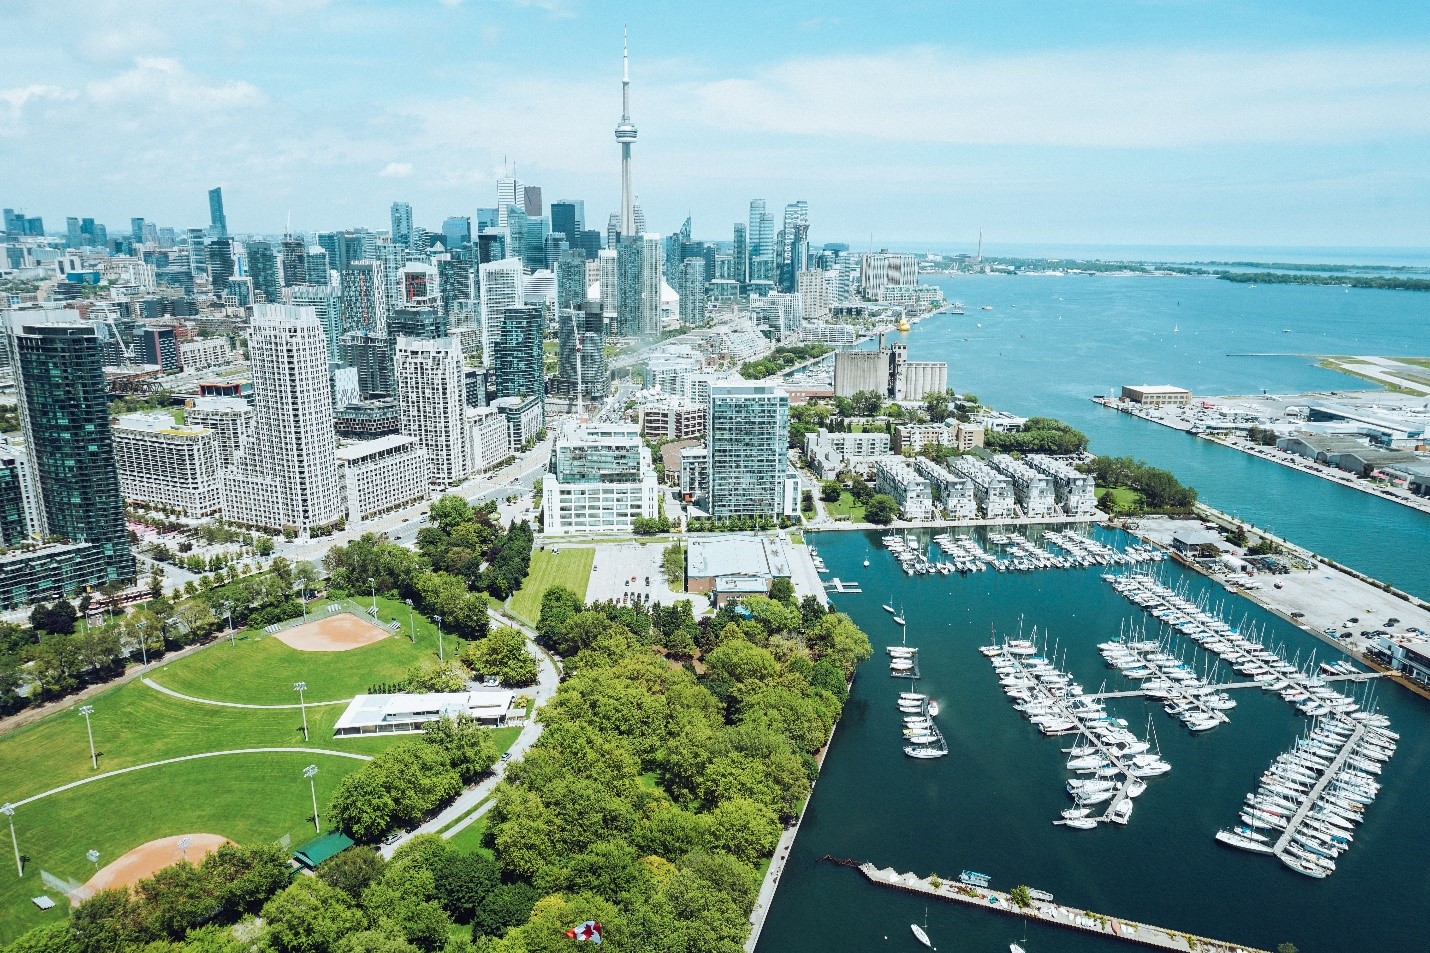 The Toronto waterfront.